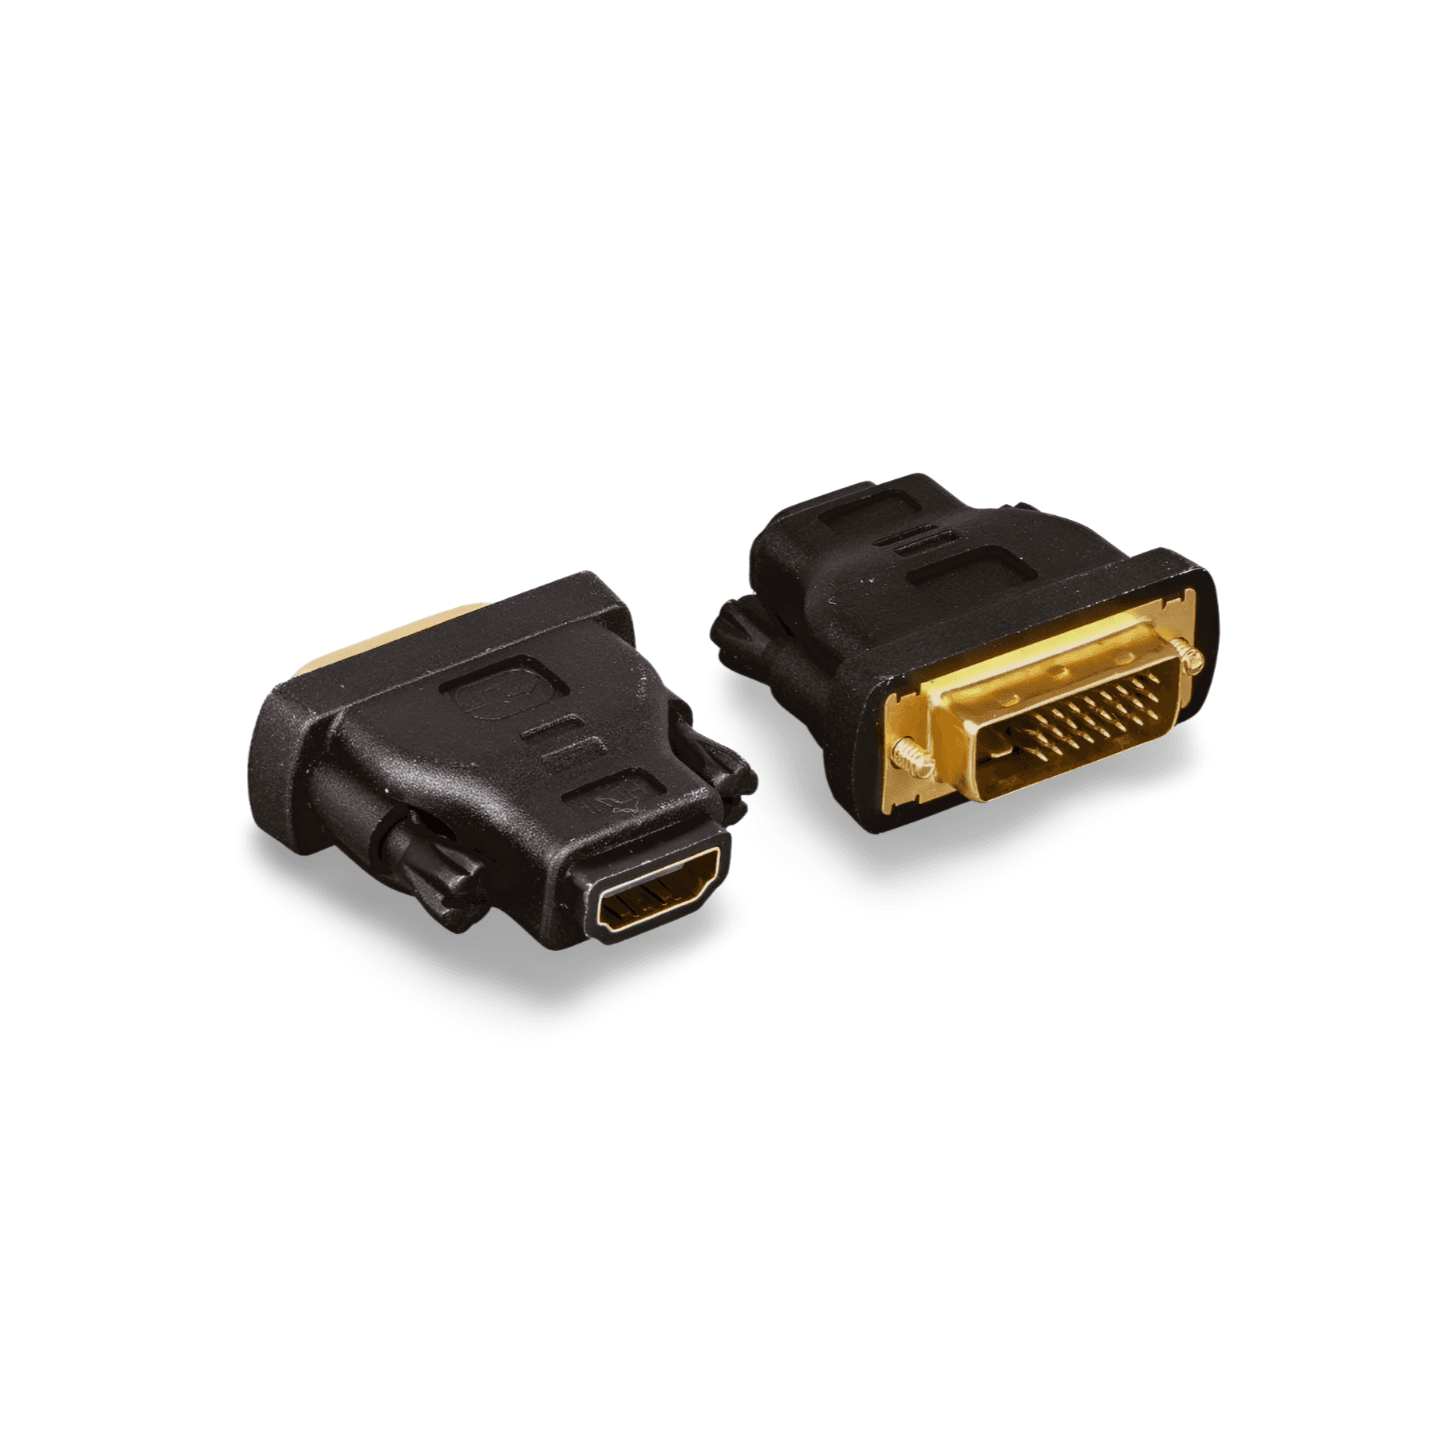 1in DVI Male to HDMI Female Adapter black